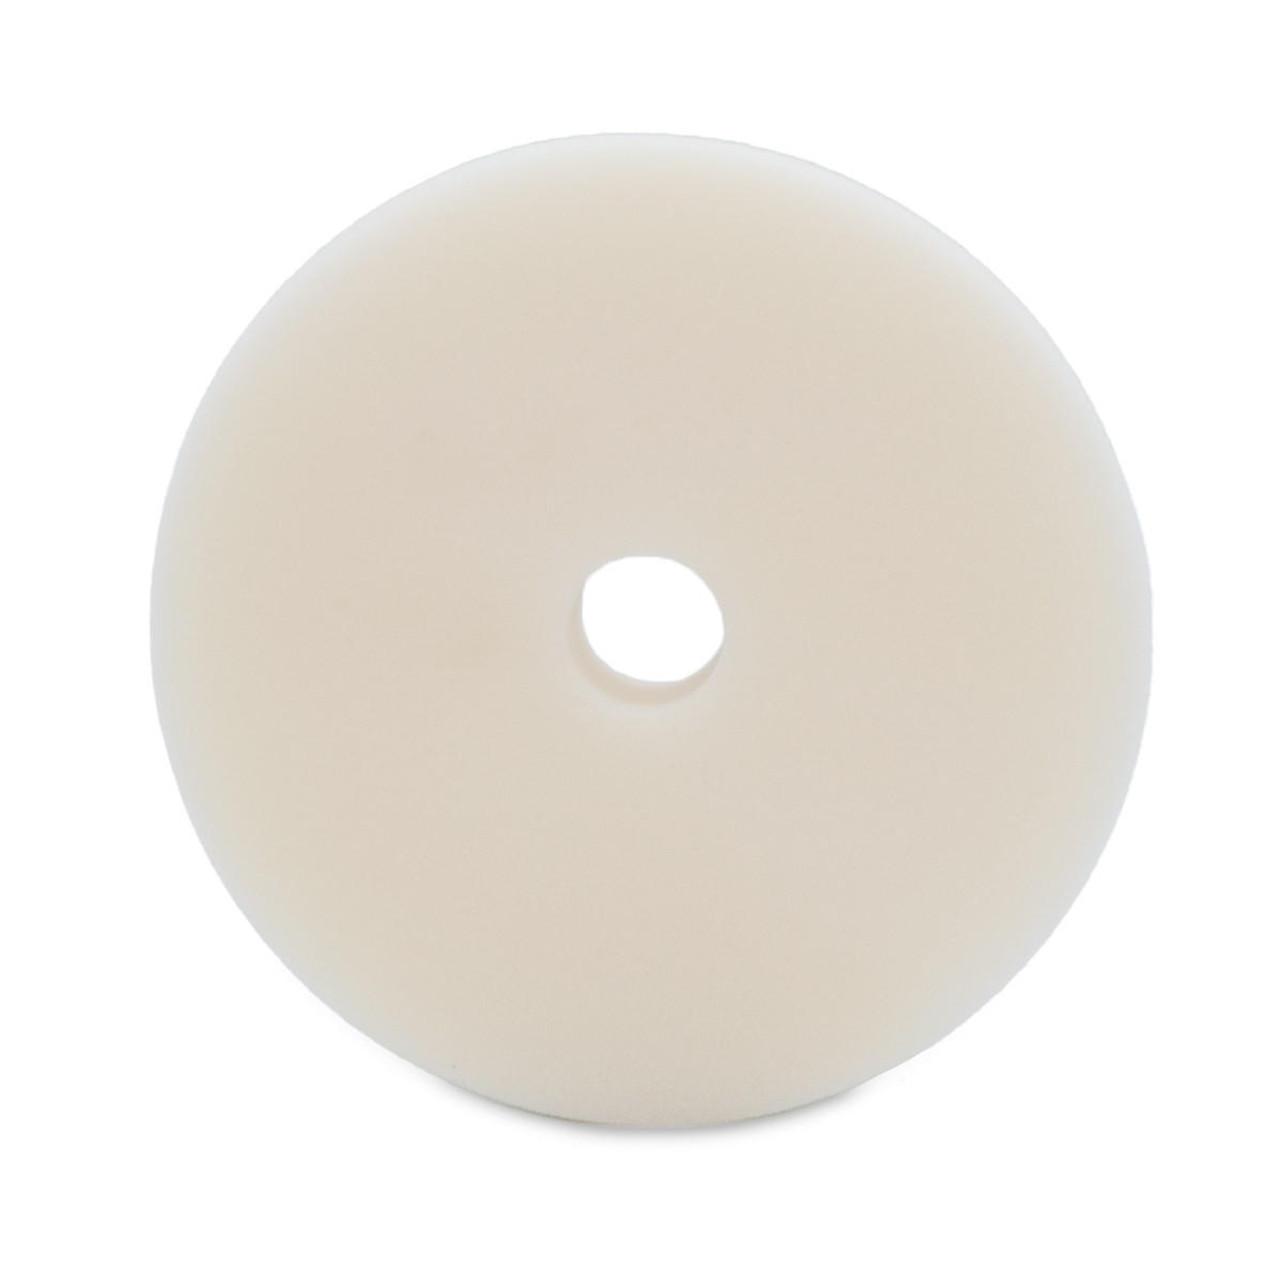 Buff and Shine Uro-Tec 5 in Soft White Finishing Foam Pad